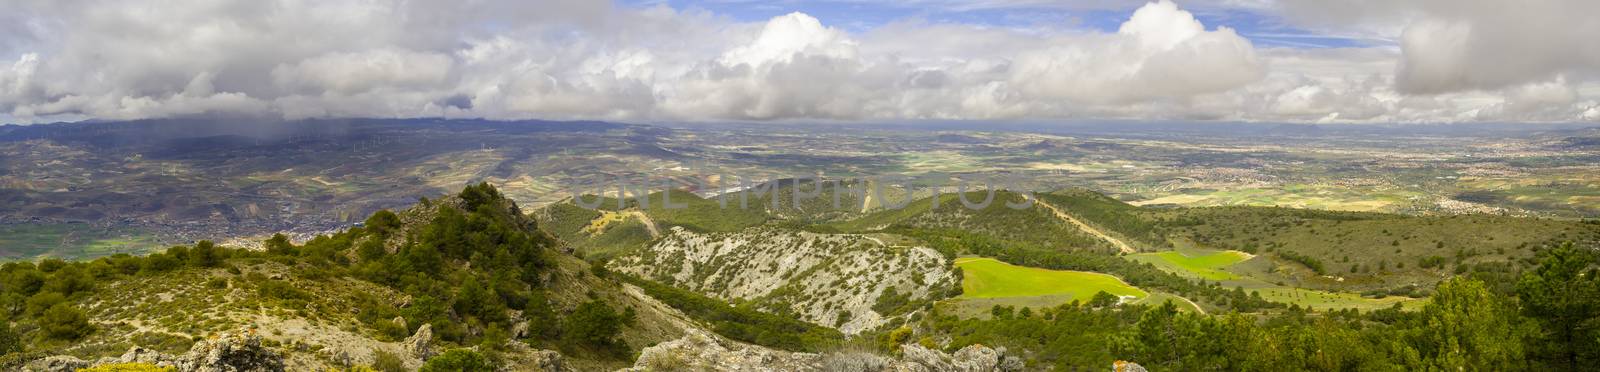 Panorama springtime aerial landscape at La Silleta de Padul, Sierra Nevada, Andalucia, Spain by kb79